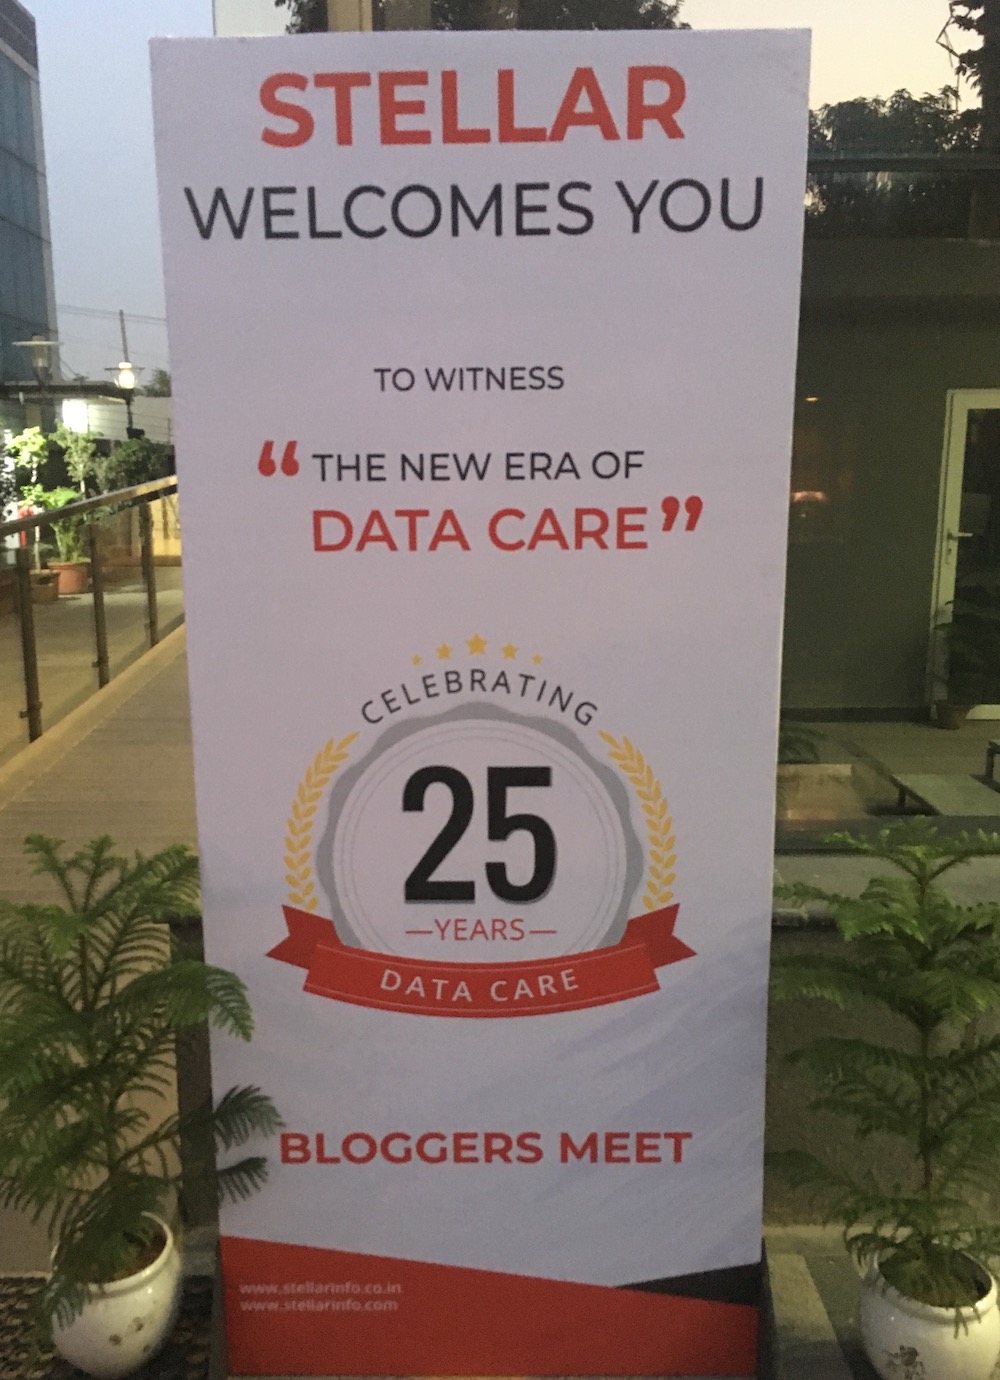 Stellar Bloggers Meet on the DIY Data Care tools. #stellar #askstellar #dataloss #datacare #data #dataretrieval #datarecovery #datamigration #dataerasure #bitraser